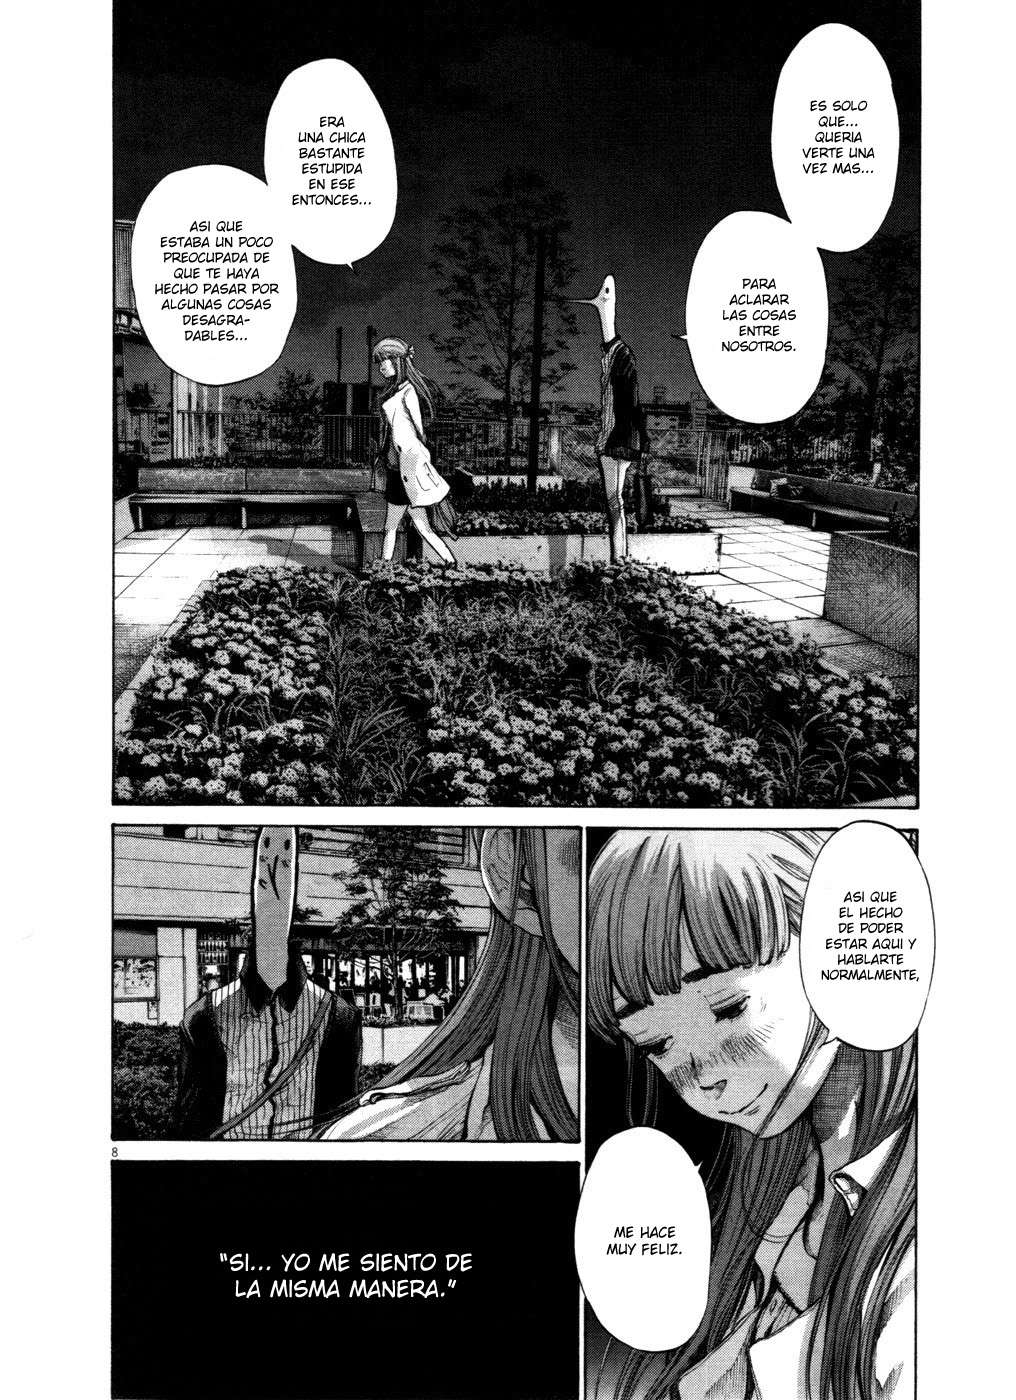 Leer Manga Oyasumi Punpun Capítulo 103 En Línea Leer Manga En Línea Gratis 